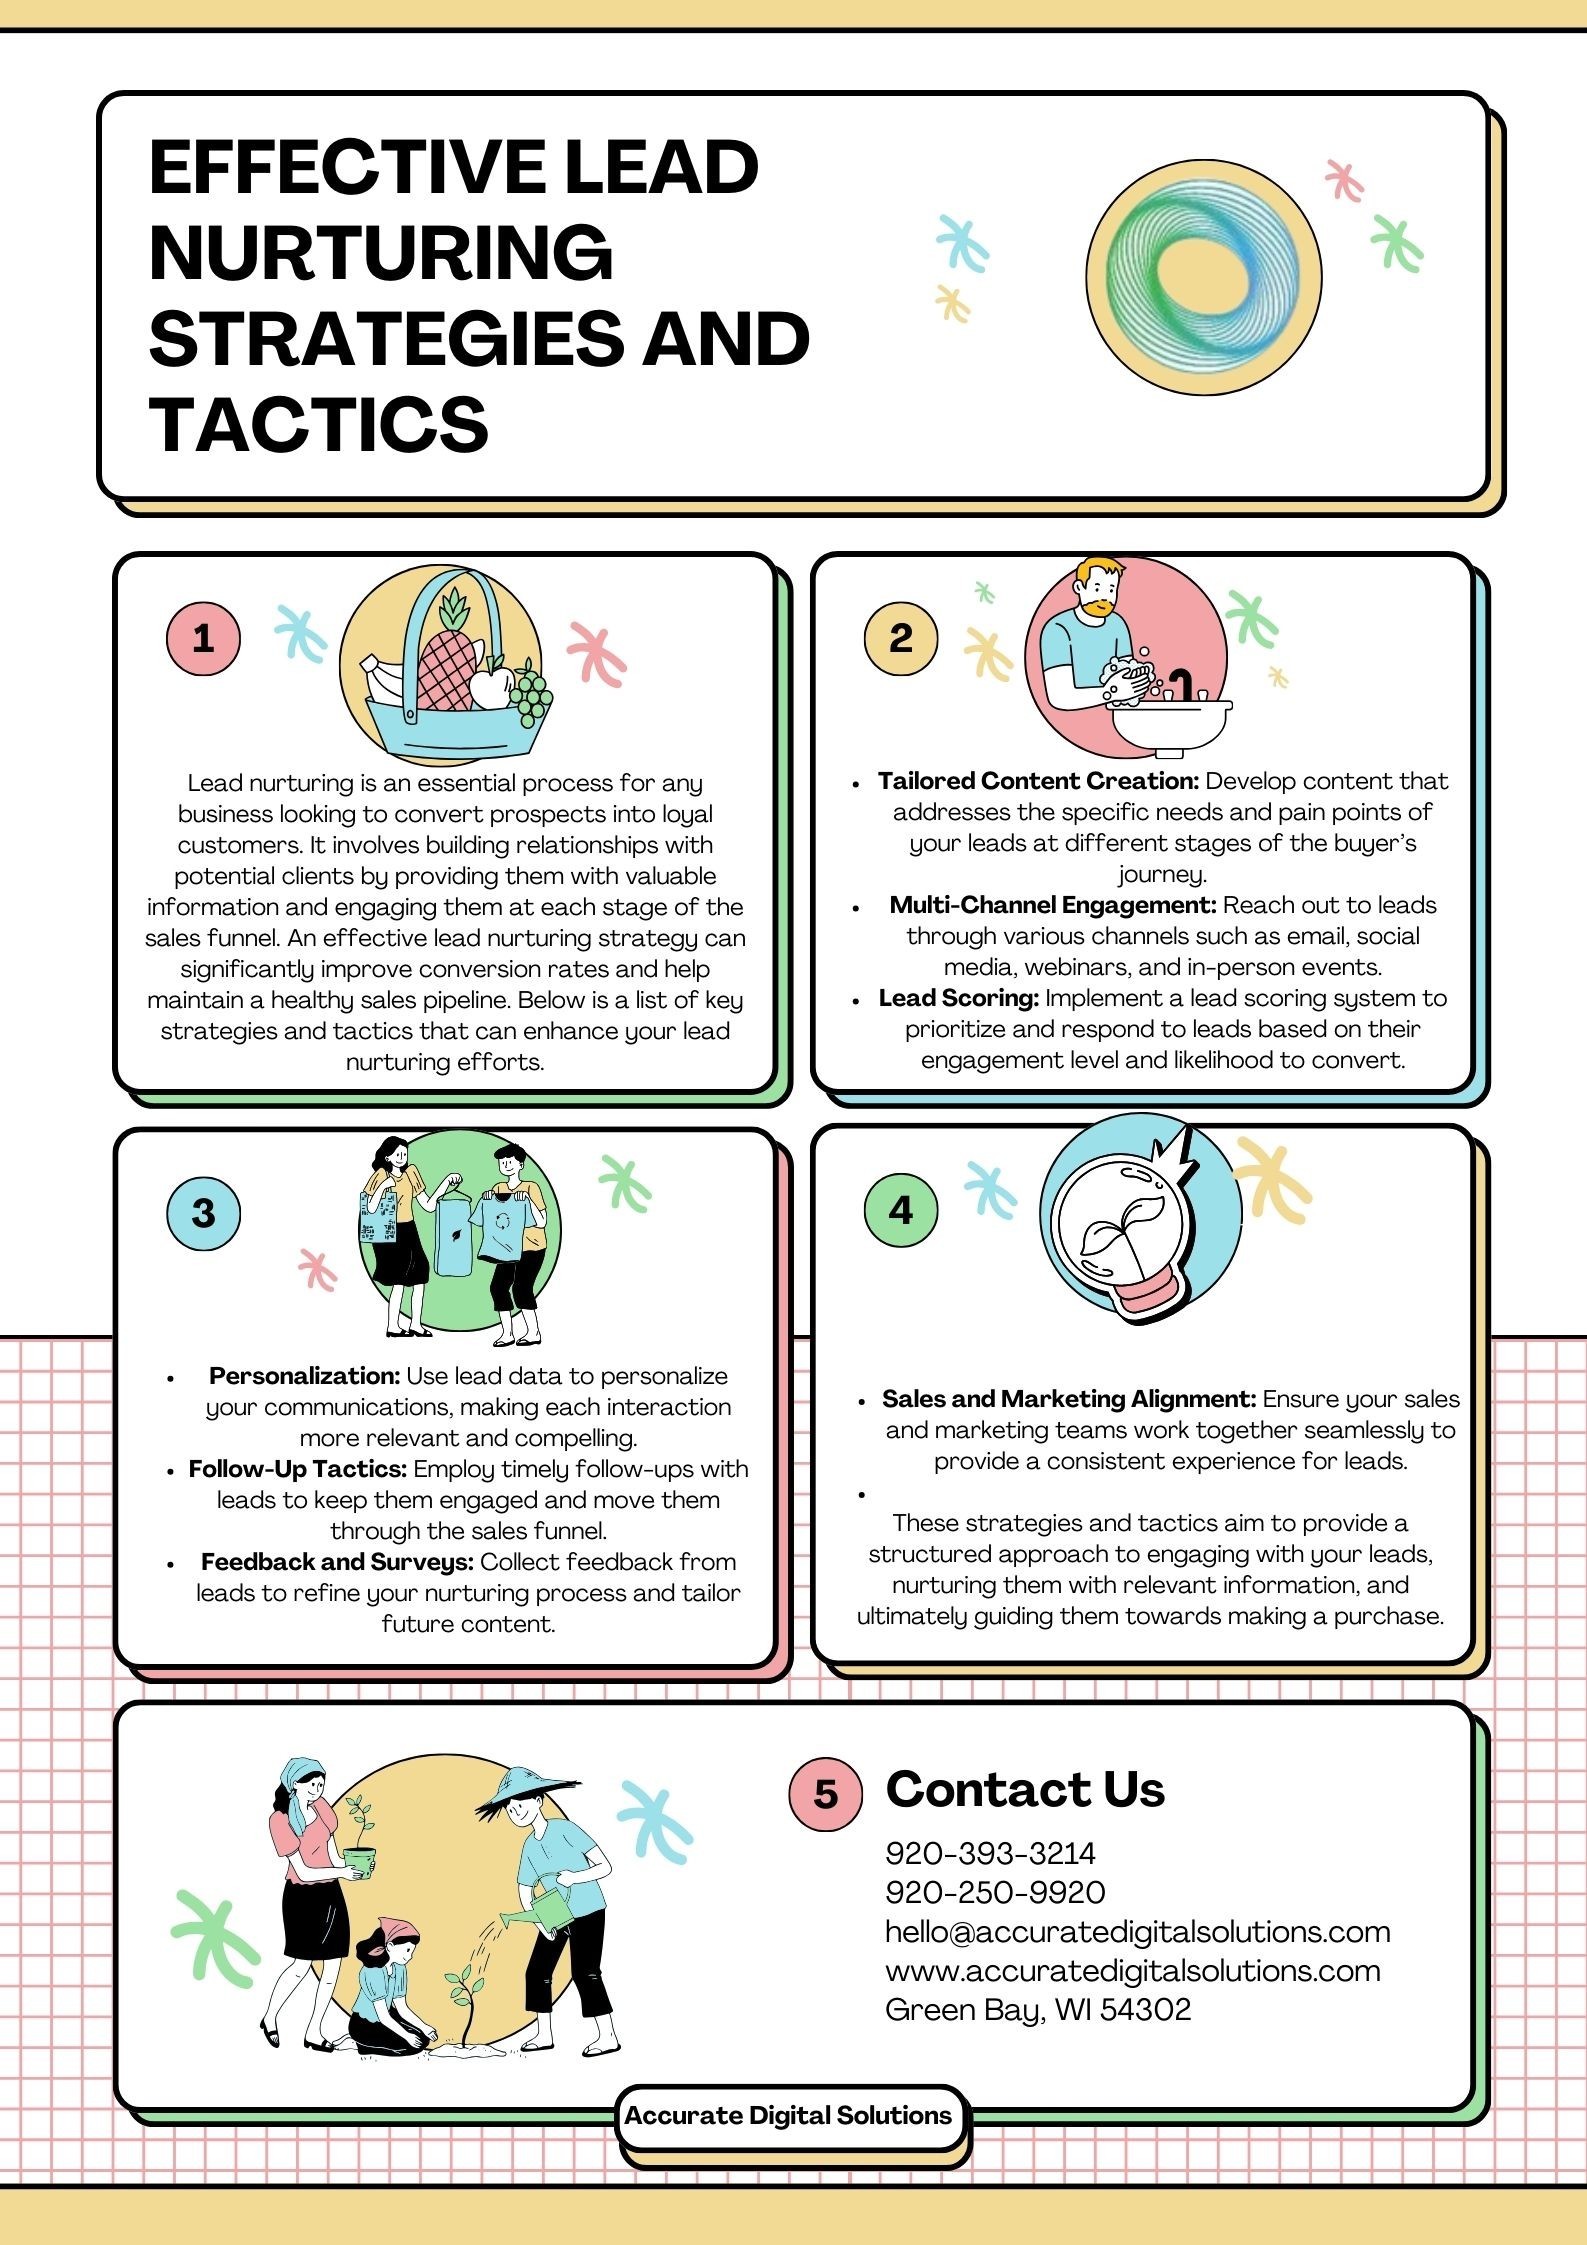 Effective Lead Nurturing Strategies and Tactics - www.accuratedigitalsolutions.com